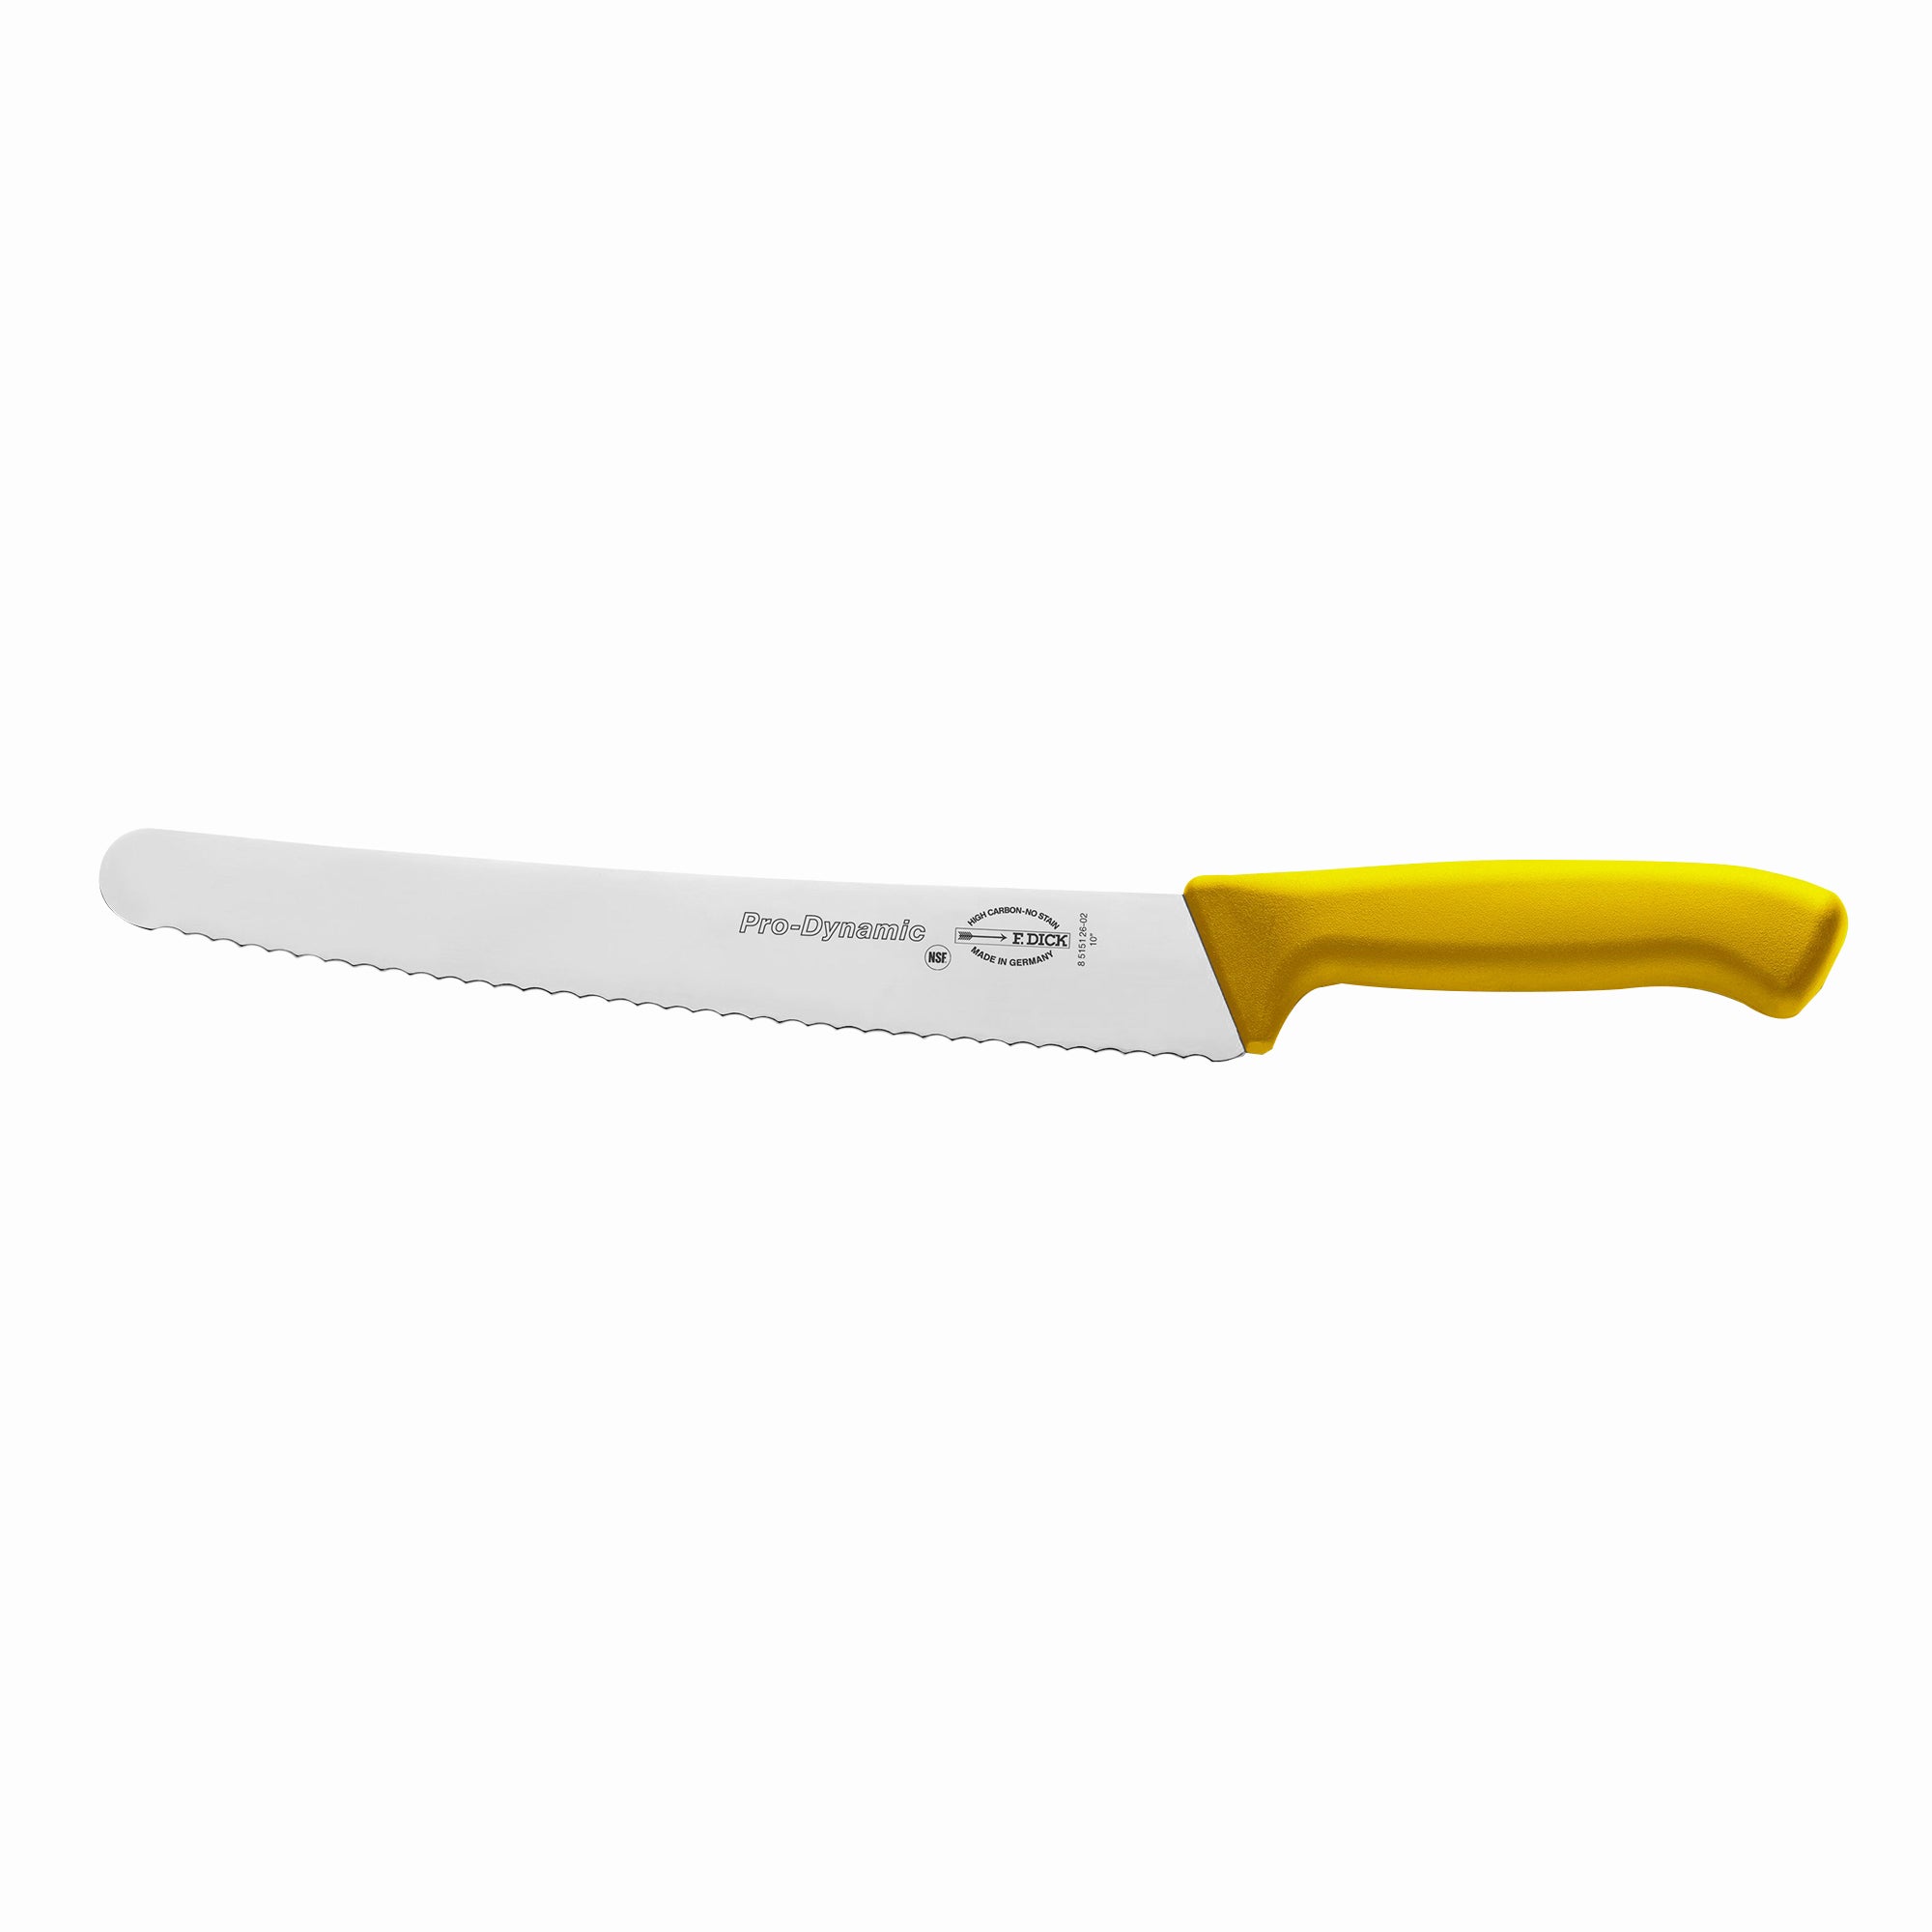 F. DICK kagekniv/universalkniv med gult skaft - 26 cm